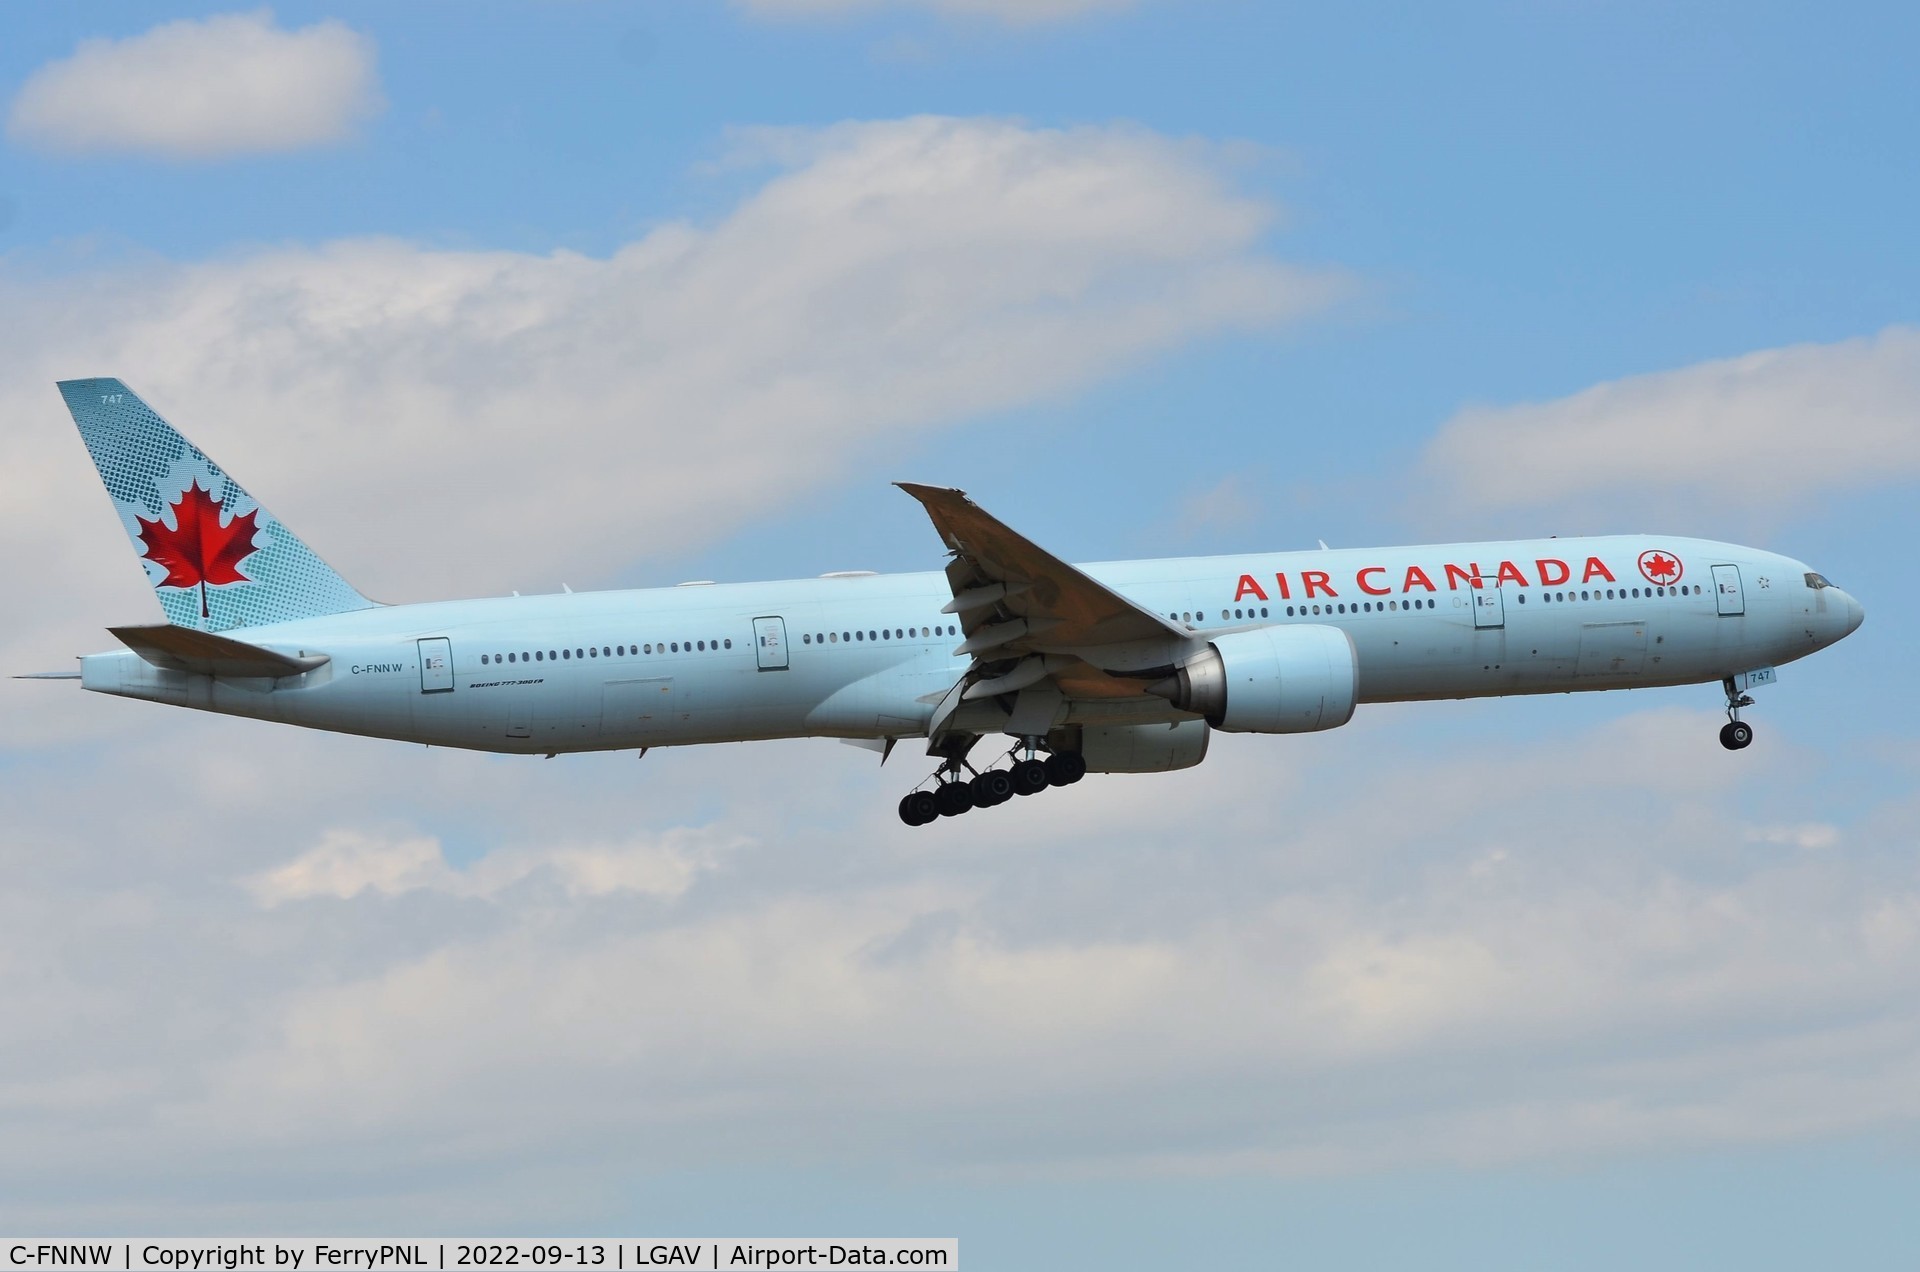 C-FNNW, 2014 Boeing 777-333/ER C/N 43250, Air Canada B773 landing